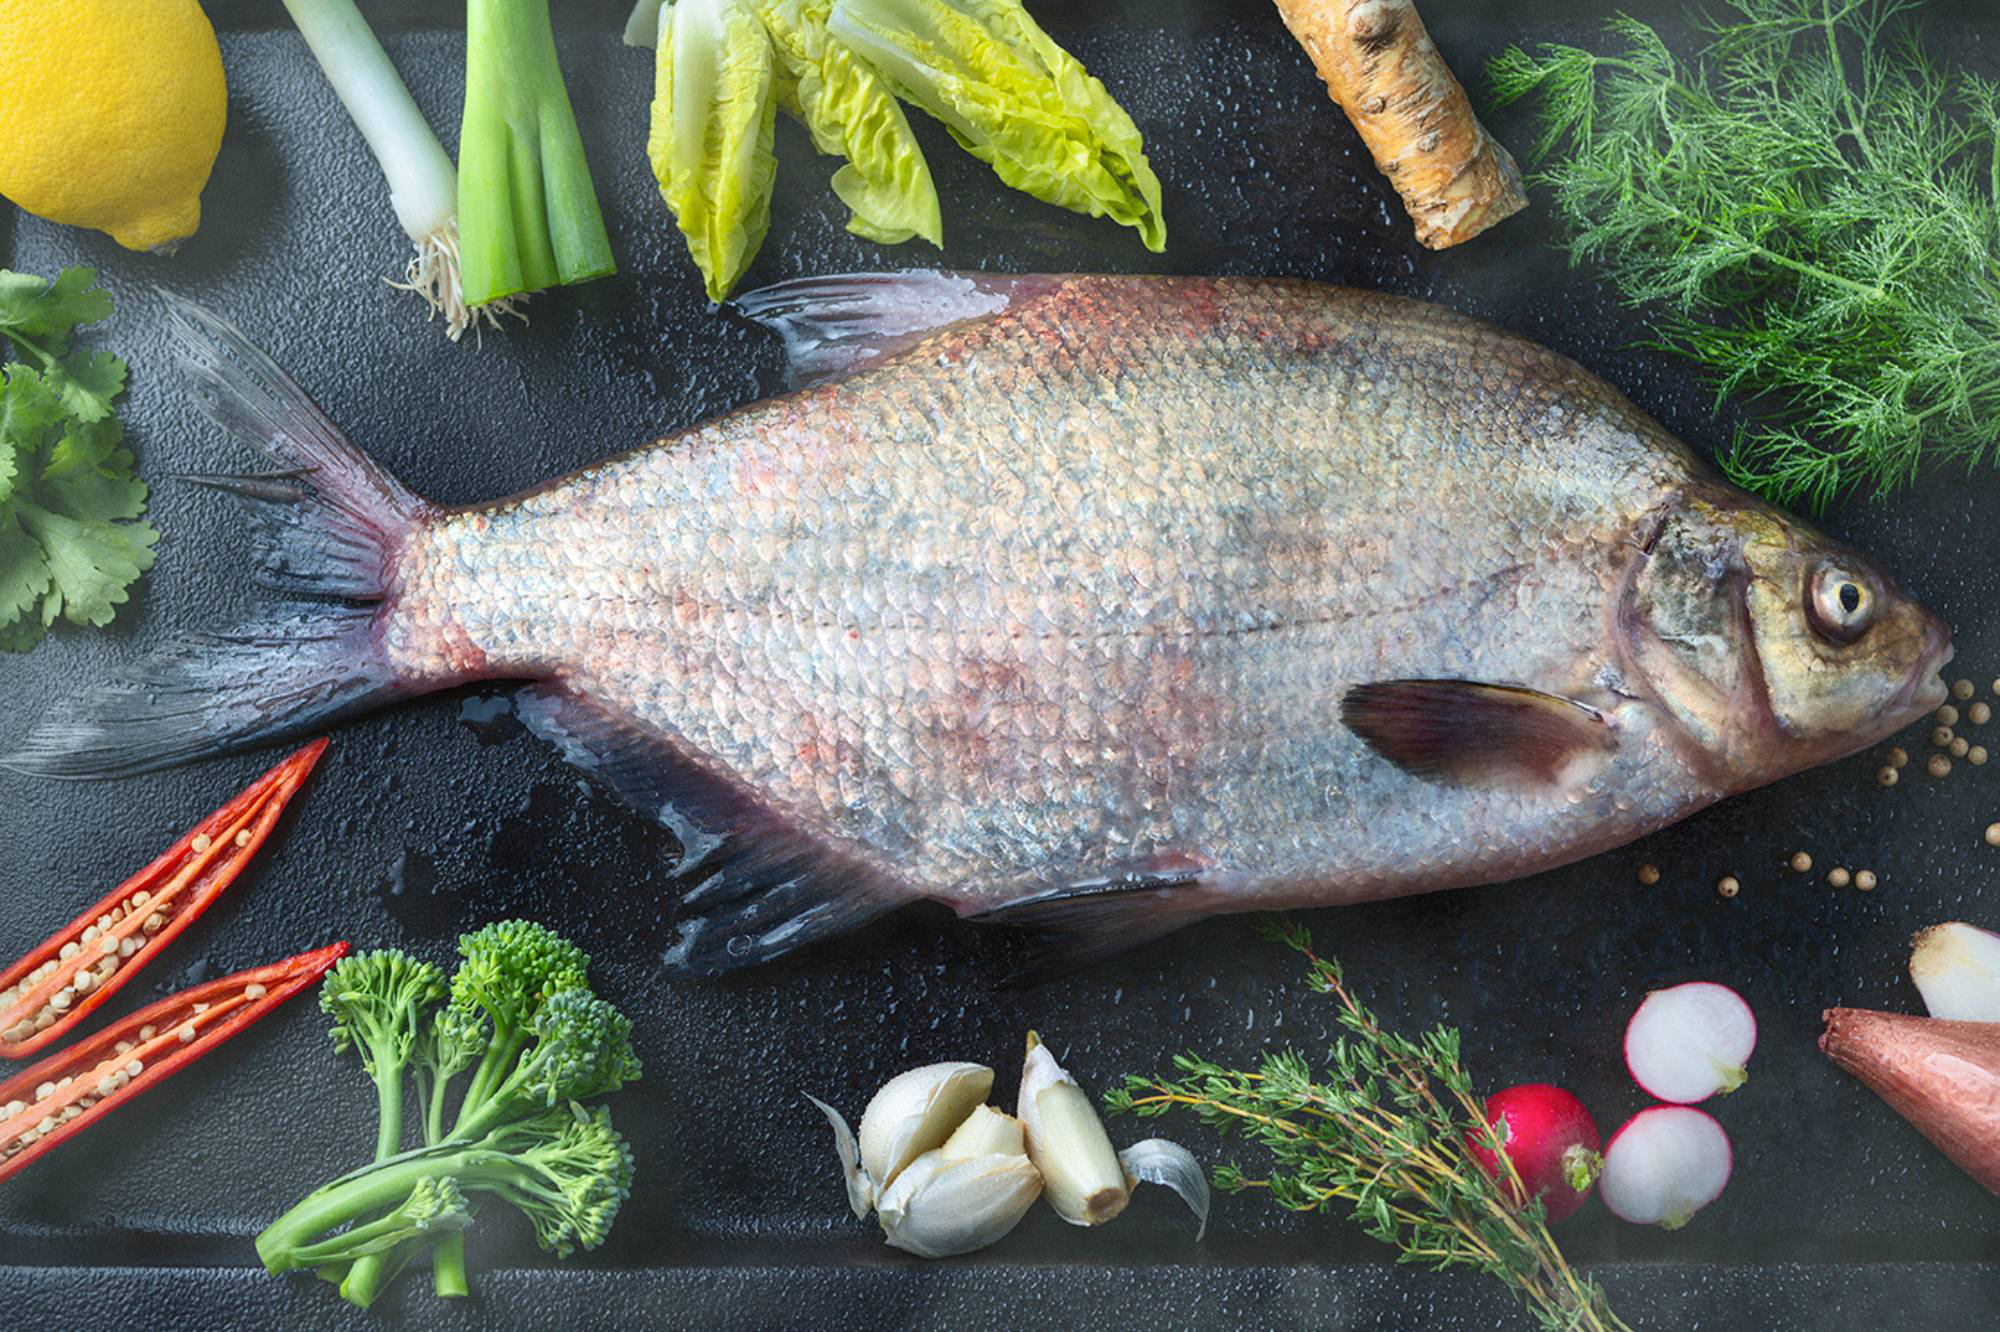 Sweden [Stockholm] 混獲で得たグリーンリストの魚で地産地消製品を